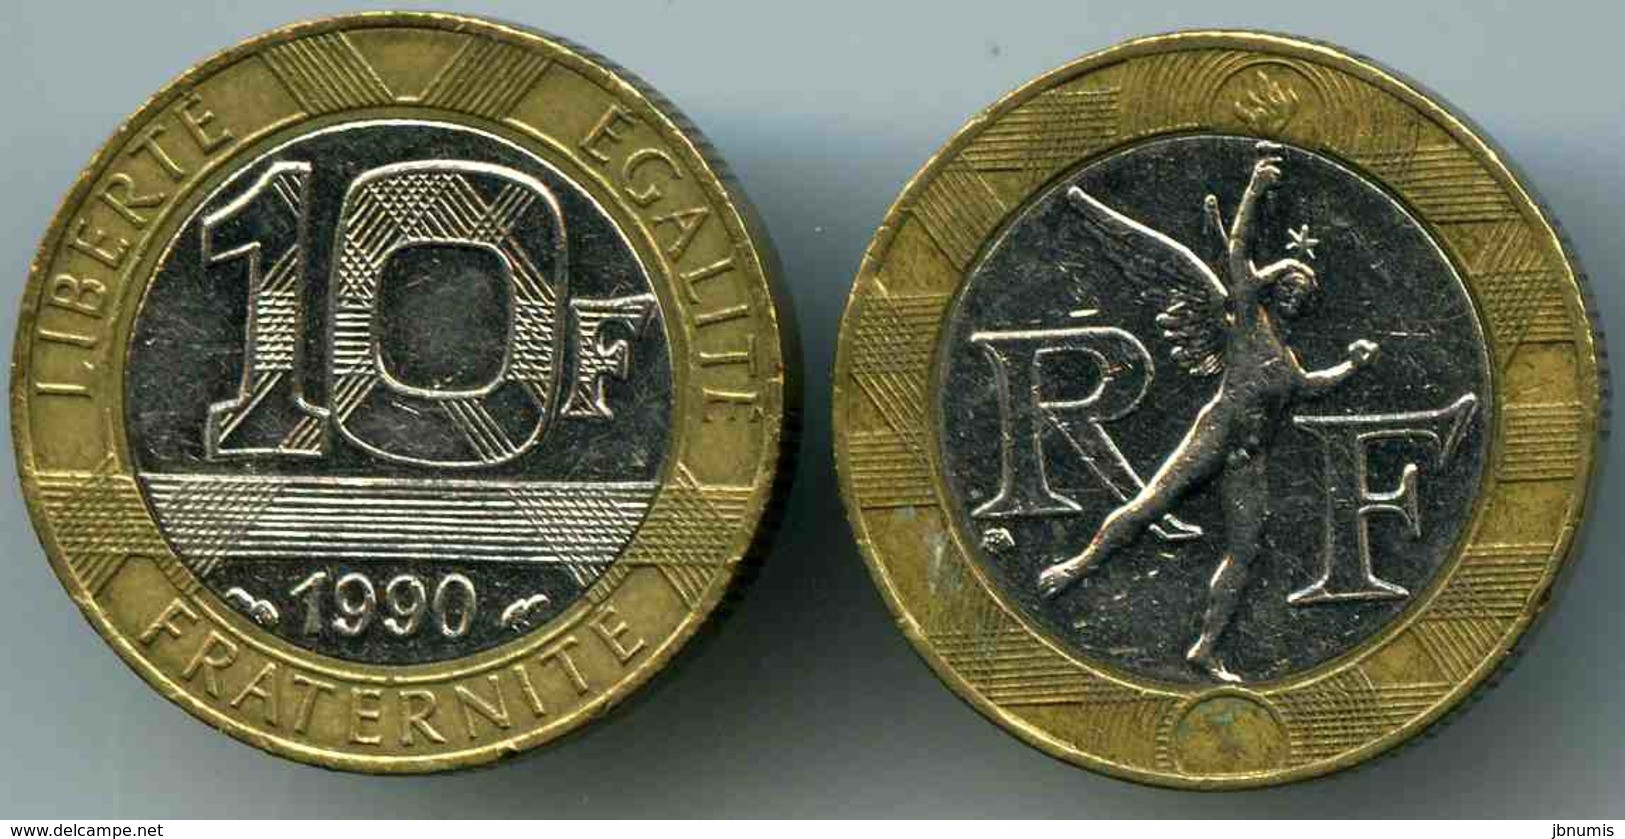 France 10 Francs 1990 GAD 827 KM 964.1 - 10 Francs